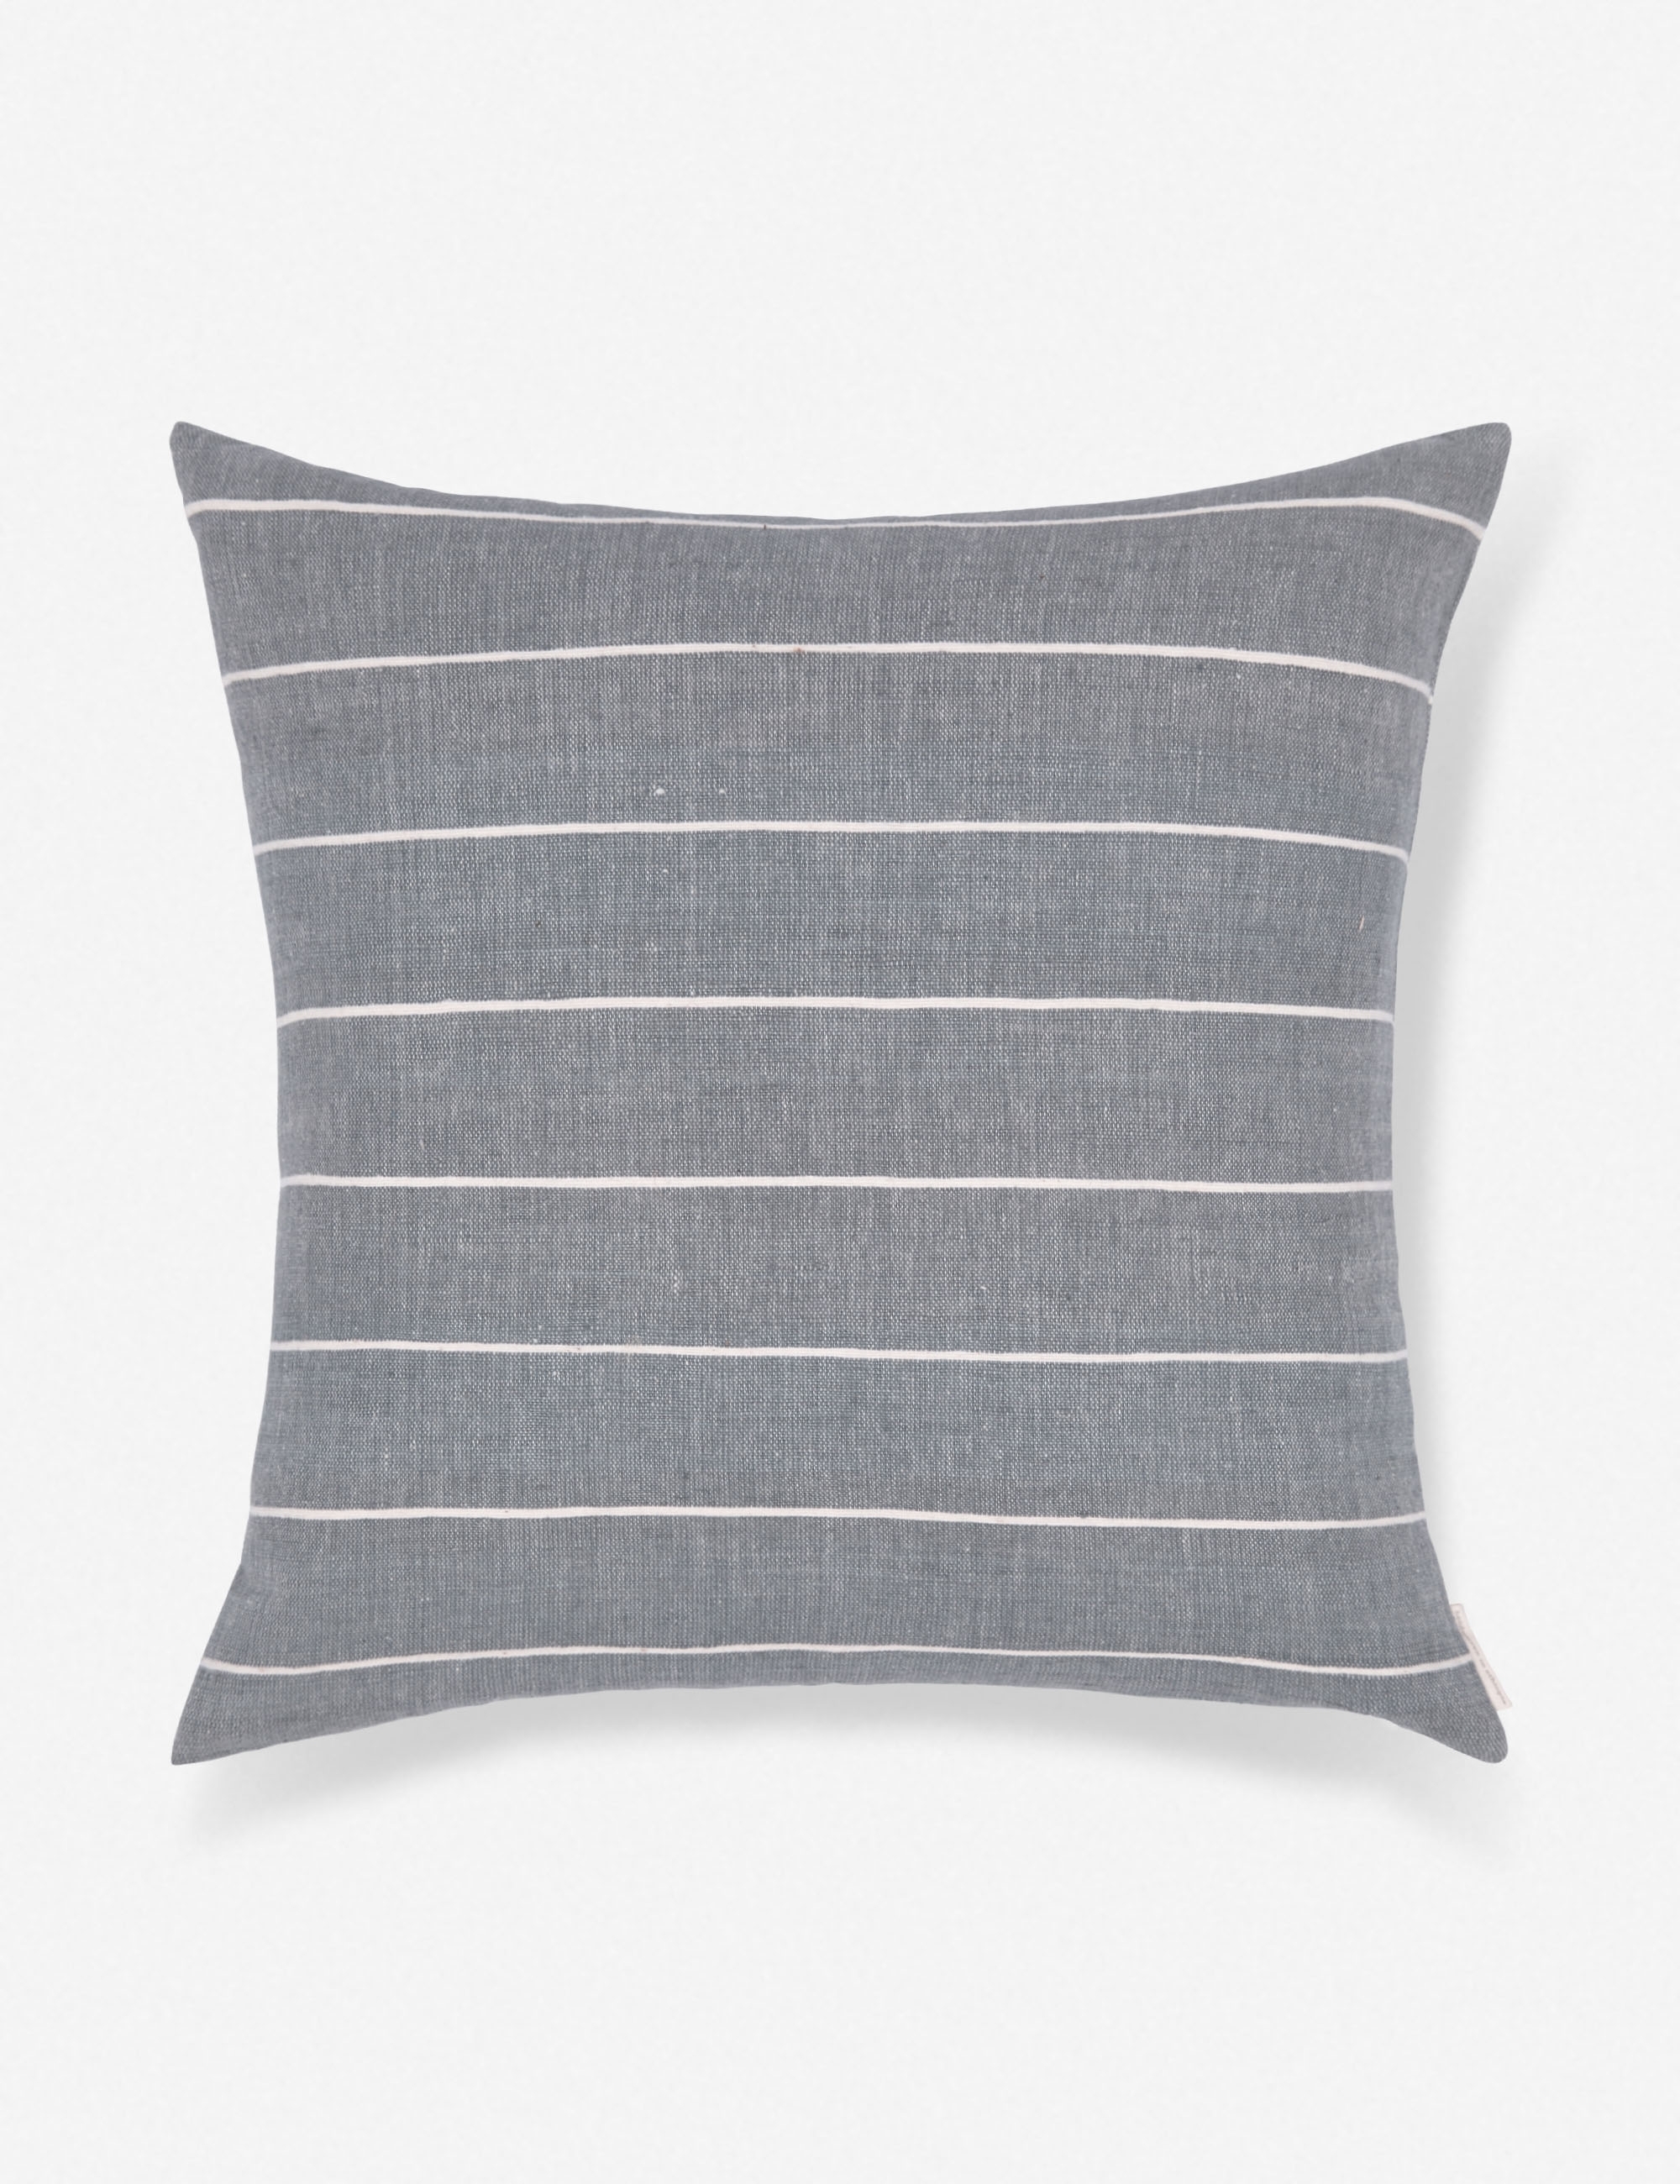 Bolé Road Textiles Melkam Pillow - Image 2